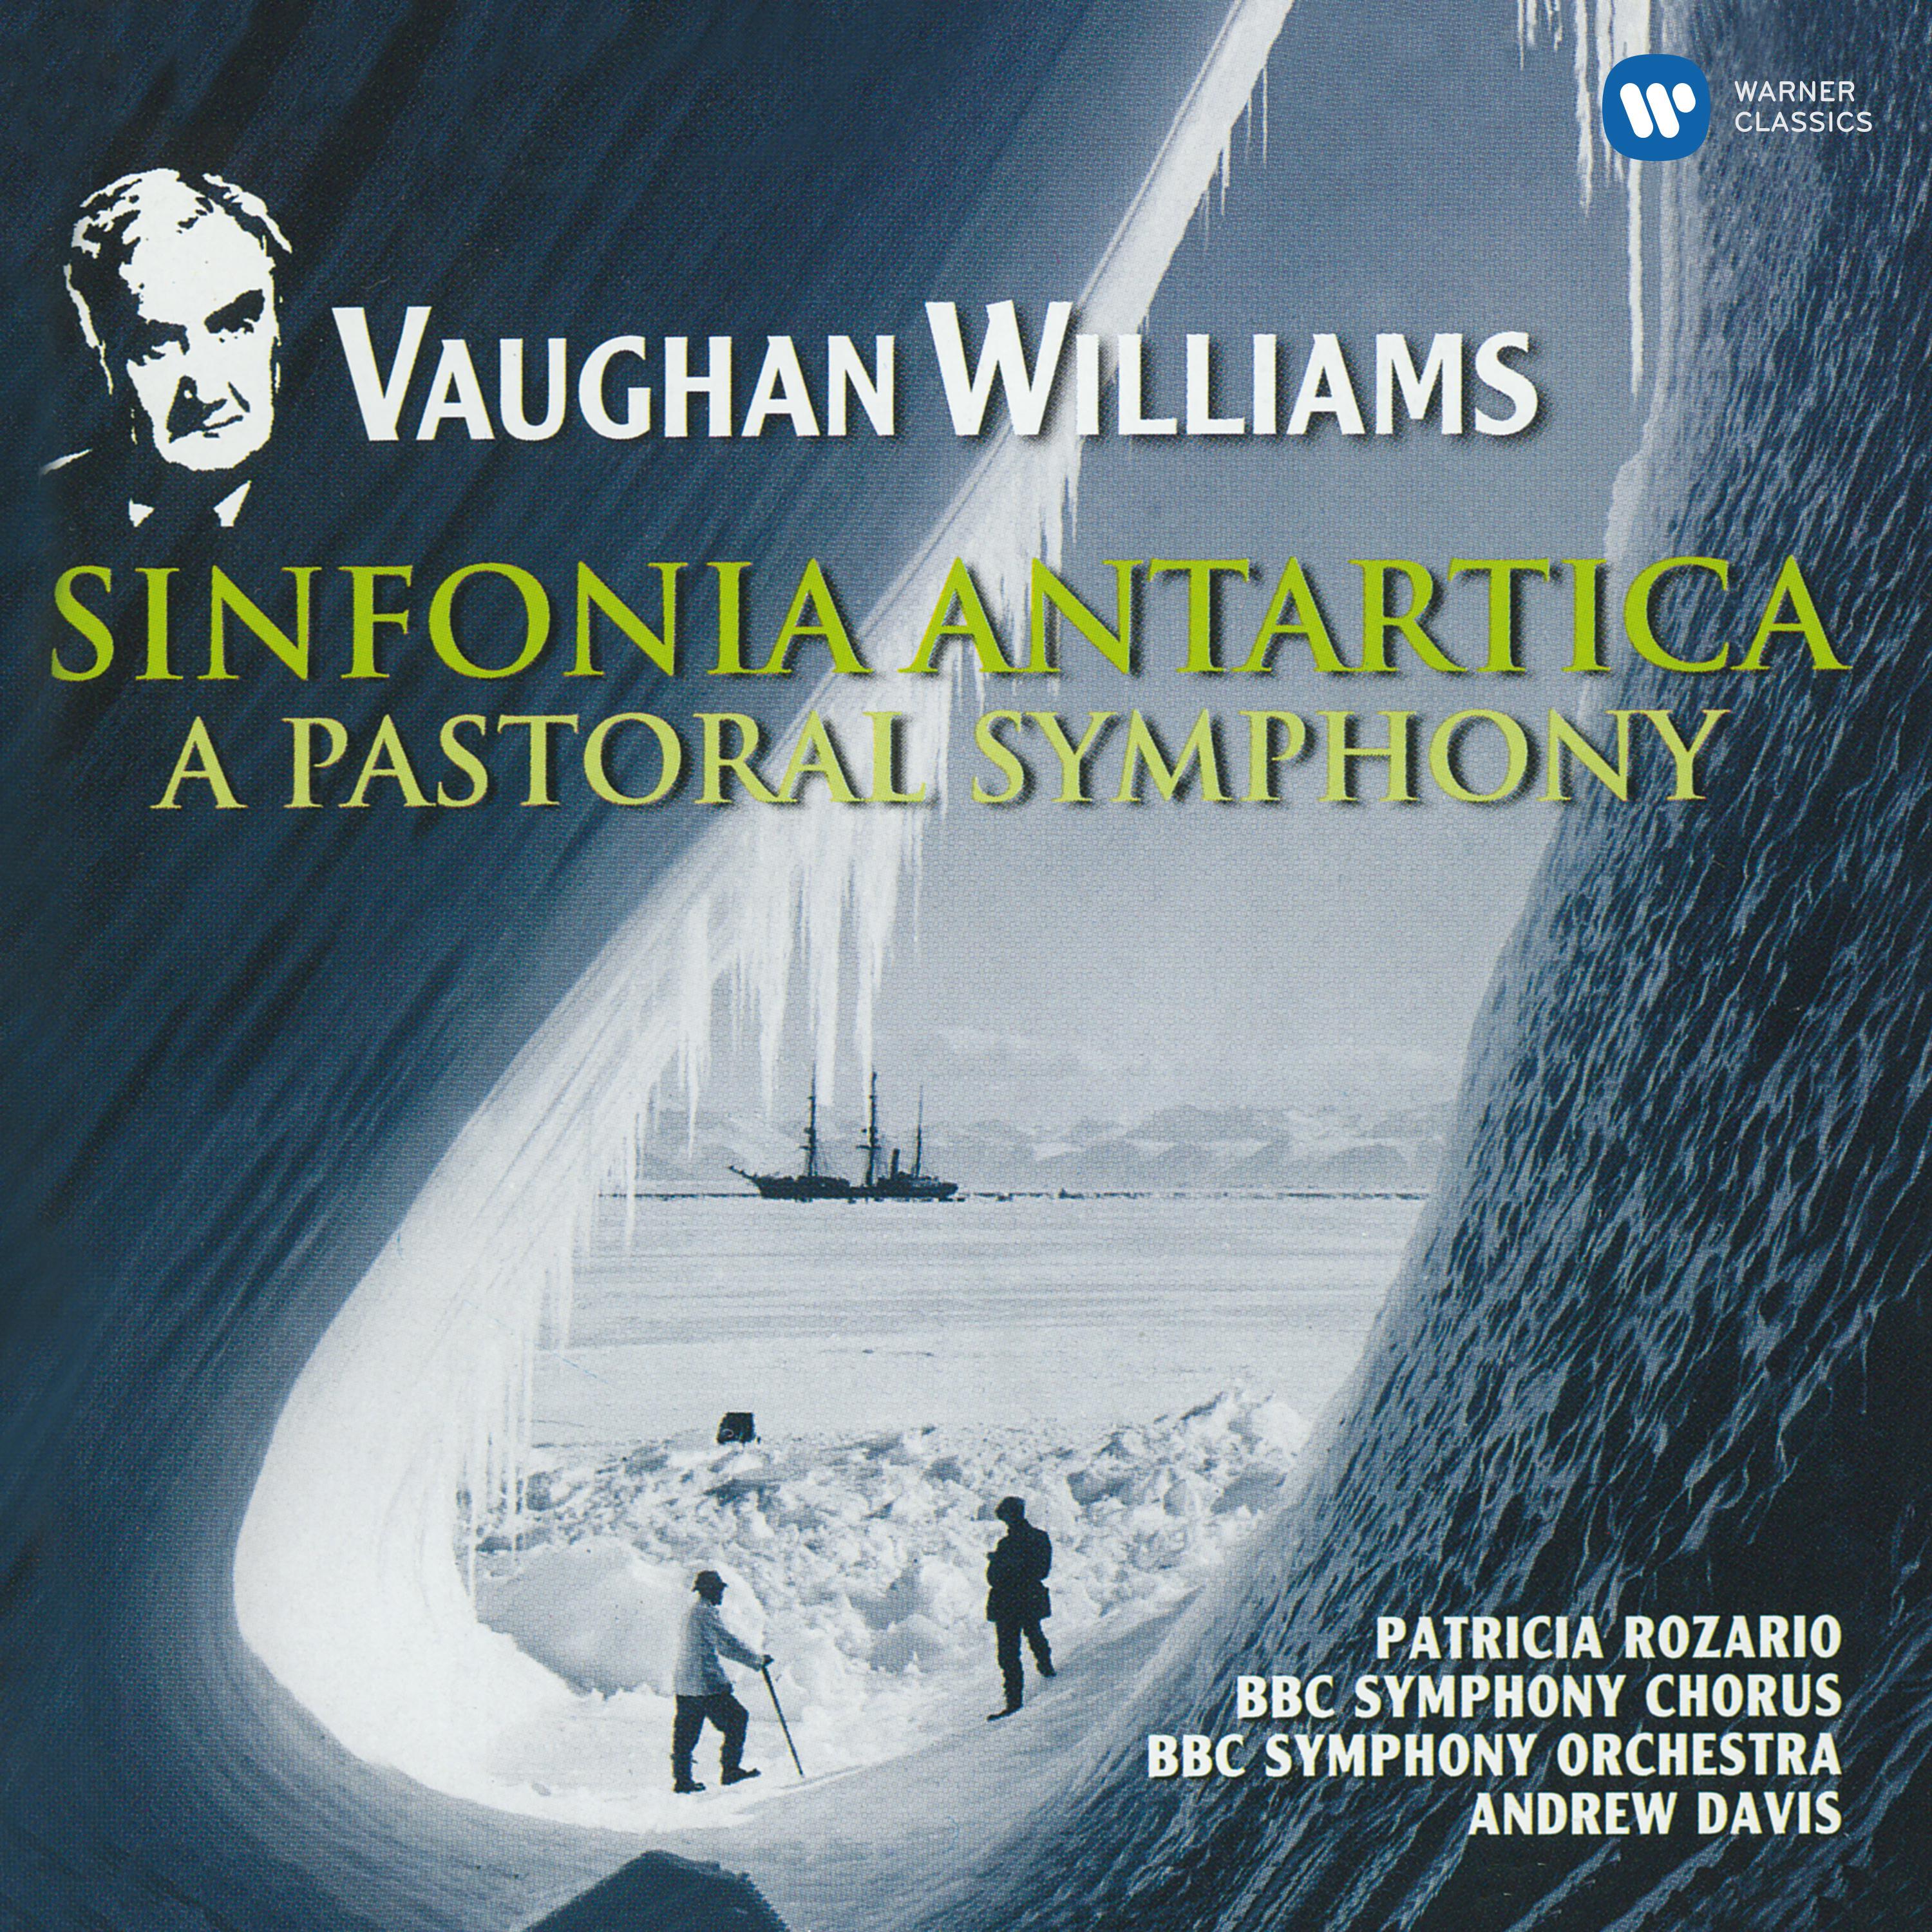 Vaughan Williams: Symphony No. 3, "A Pastoral Symphony" & Symphony No. 7, "Sinfonia Antartica"